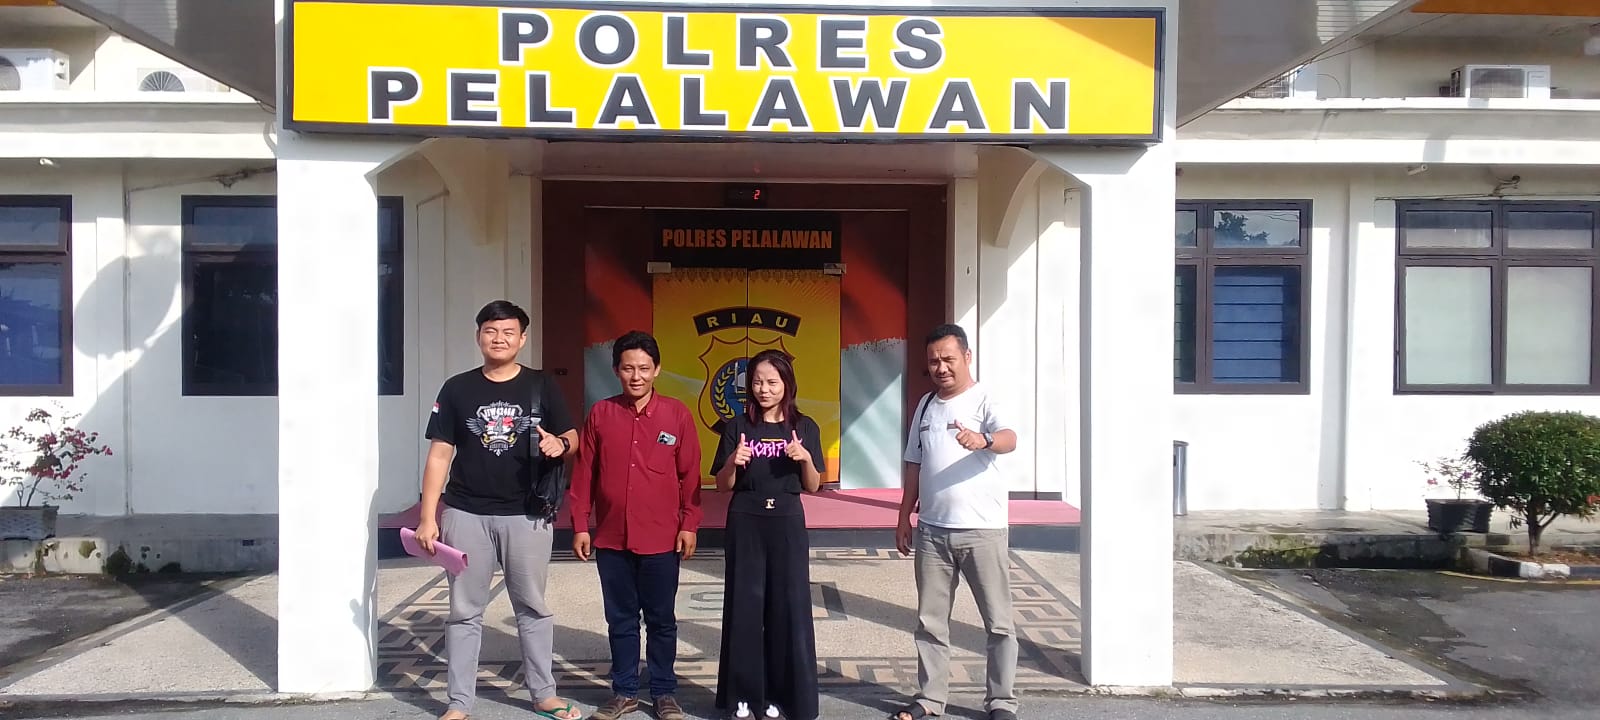 Pergi ke Riau, Akhirnya Remaja Puteri Asal Bengkulu Tengah Dijemput Pulang